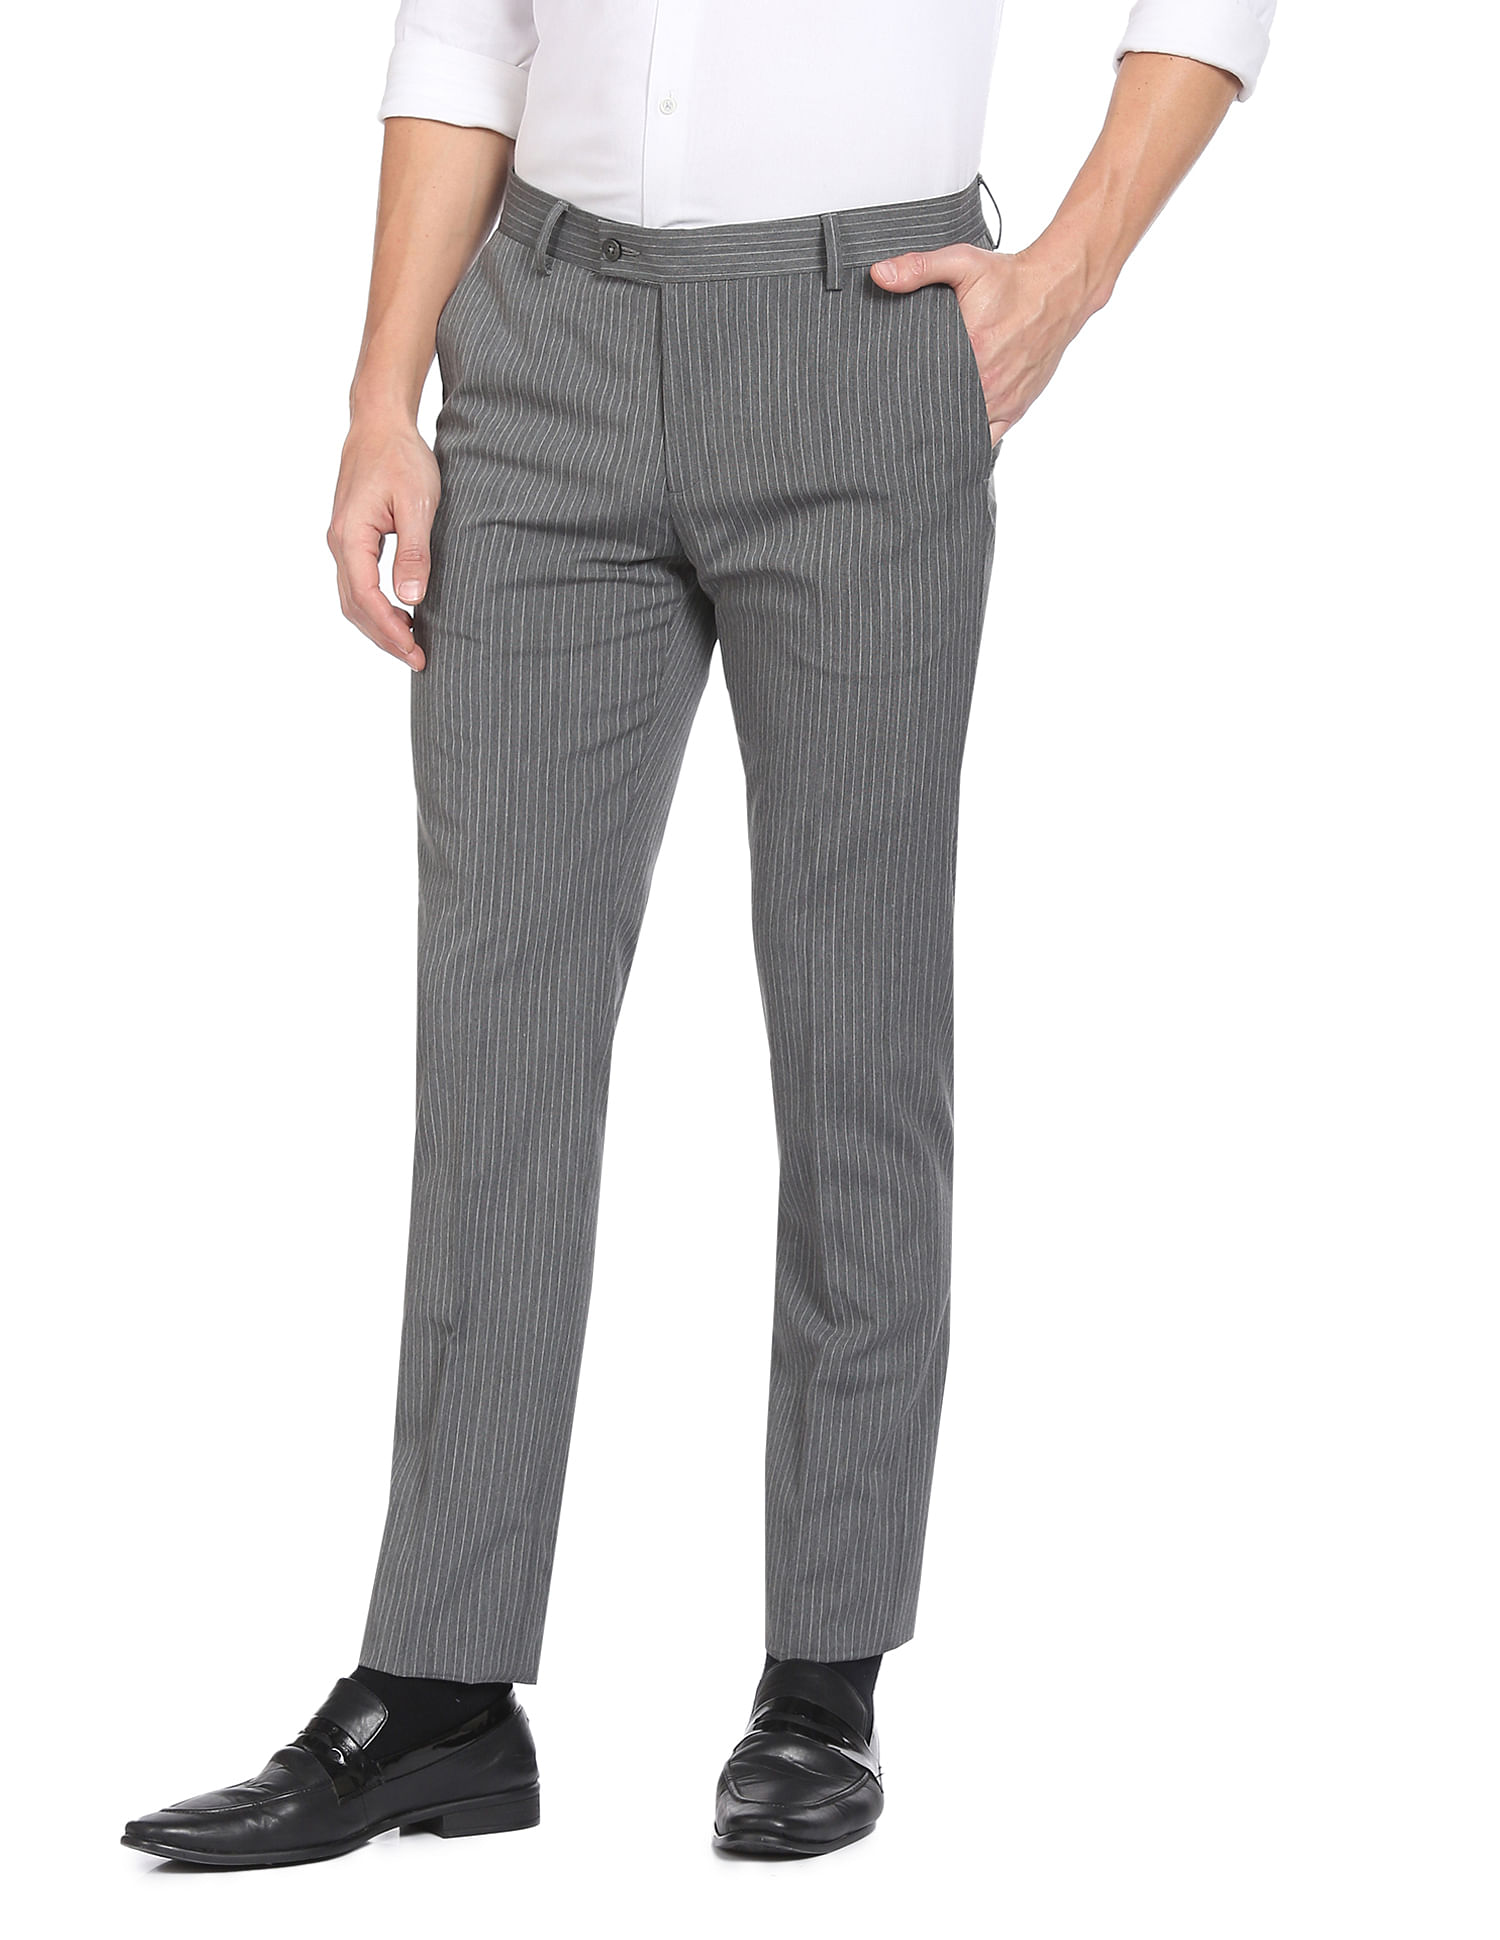 Minnis - Brown Chalk Stripe Flannel - High Rise Trouser | SPIER & MACKAY